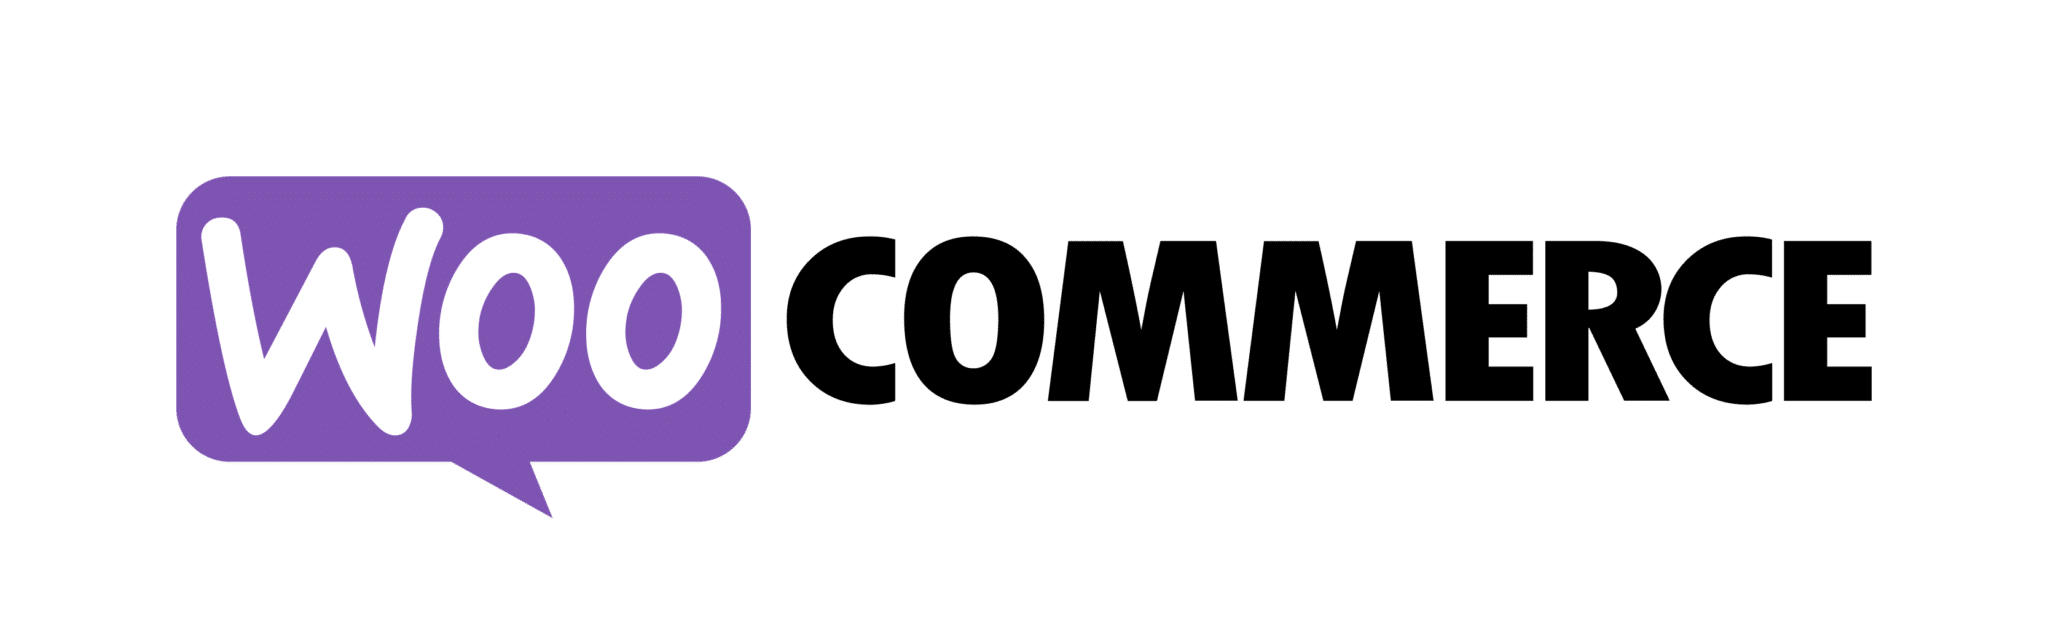 Logo WooCommerce - Tu tienda online con WooCommerce